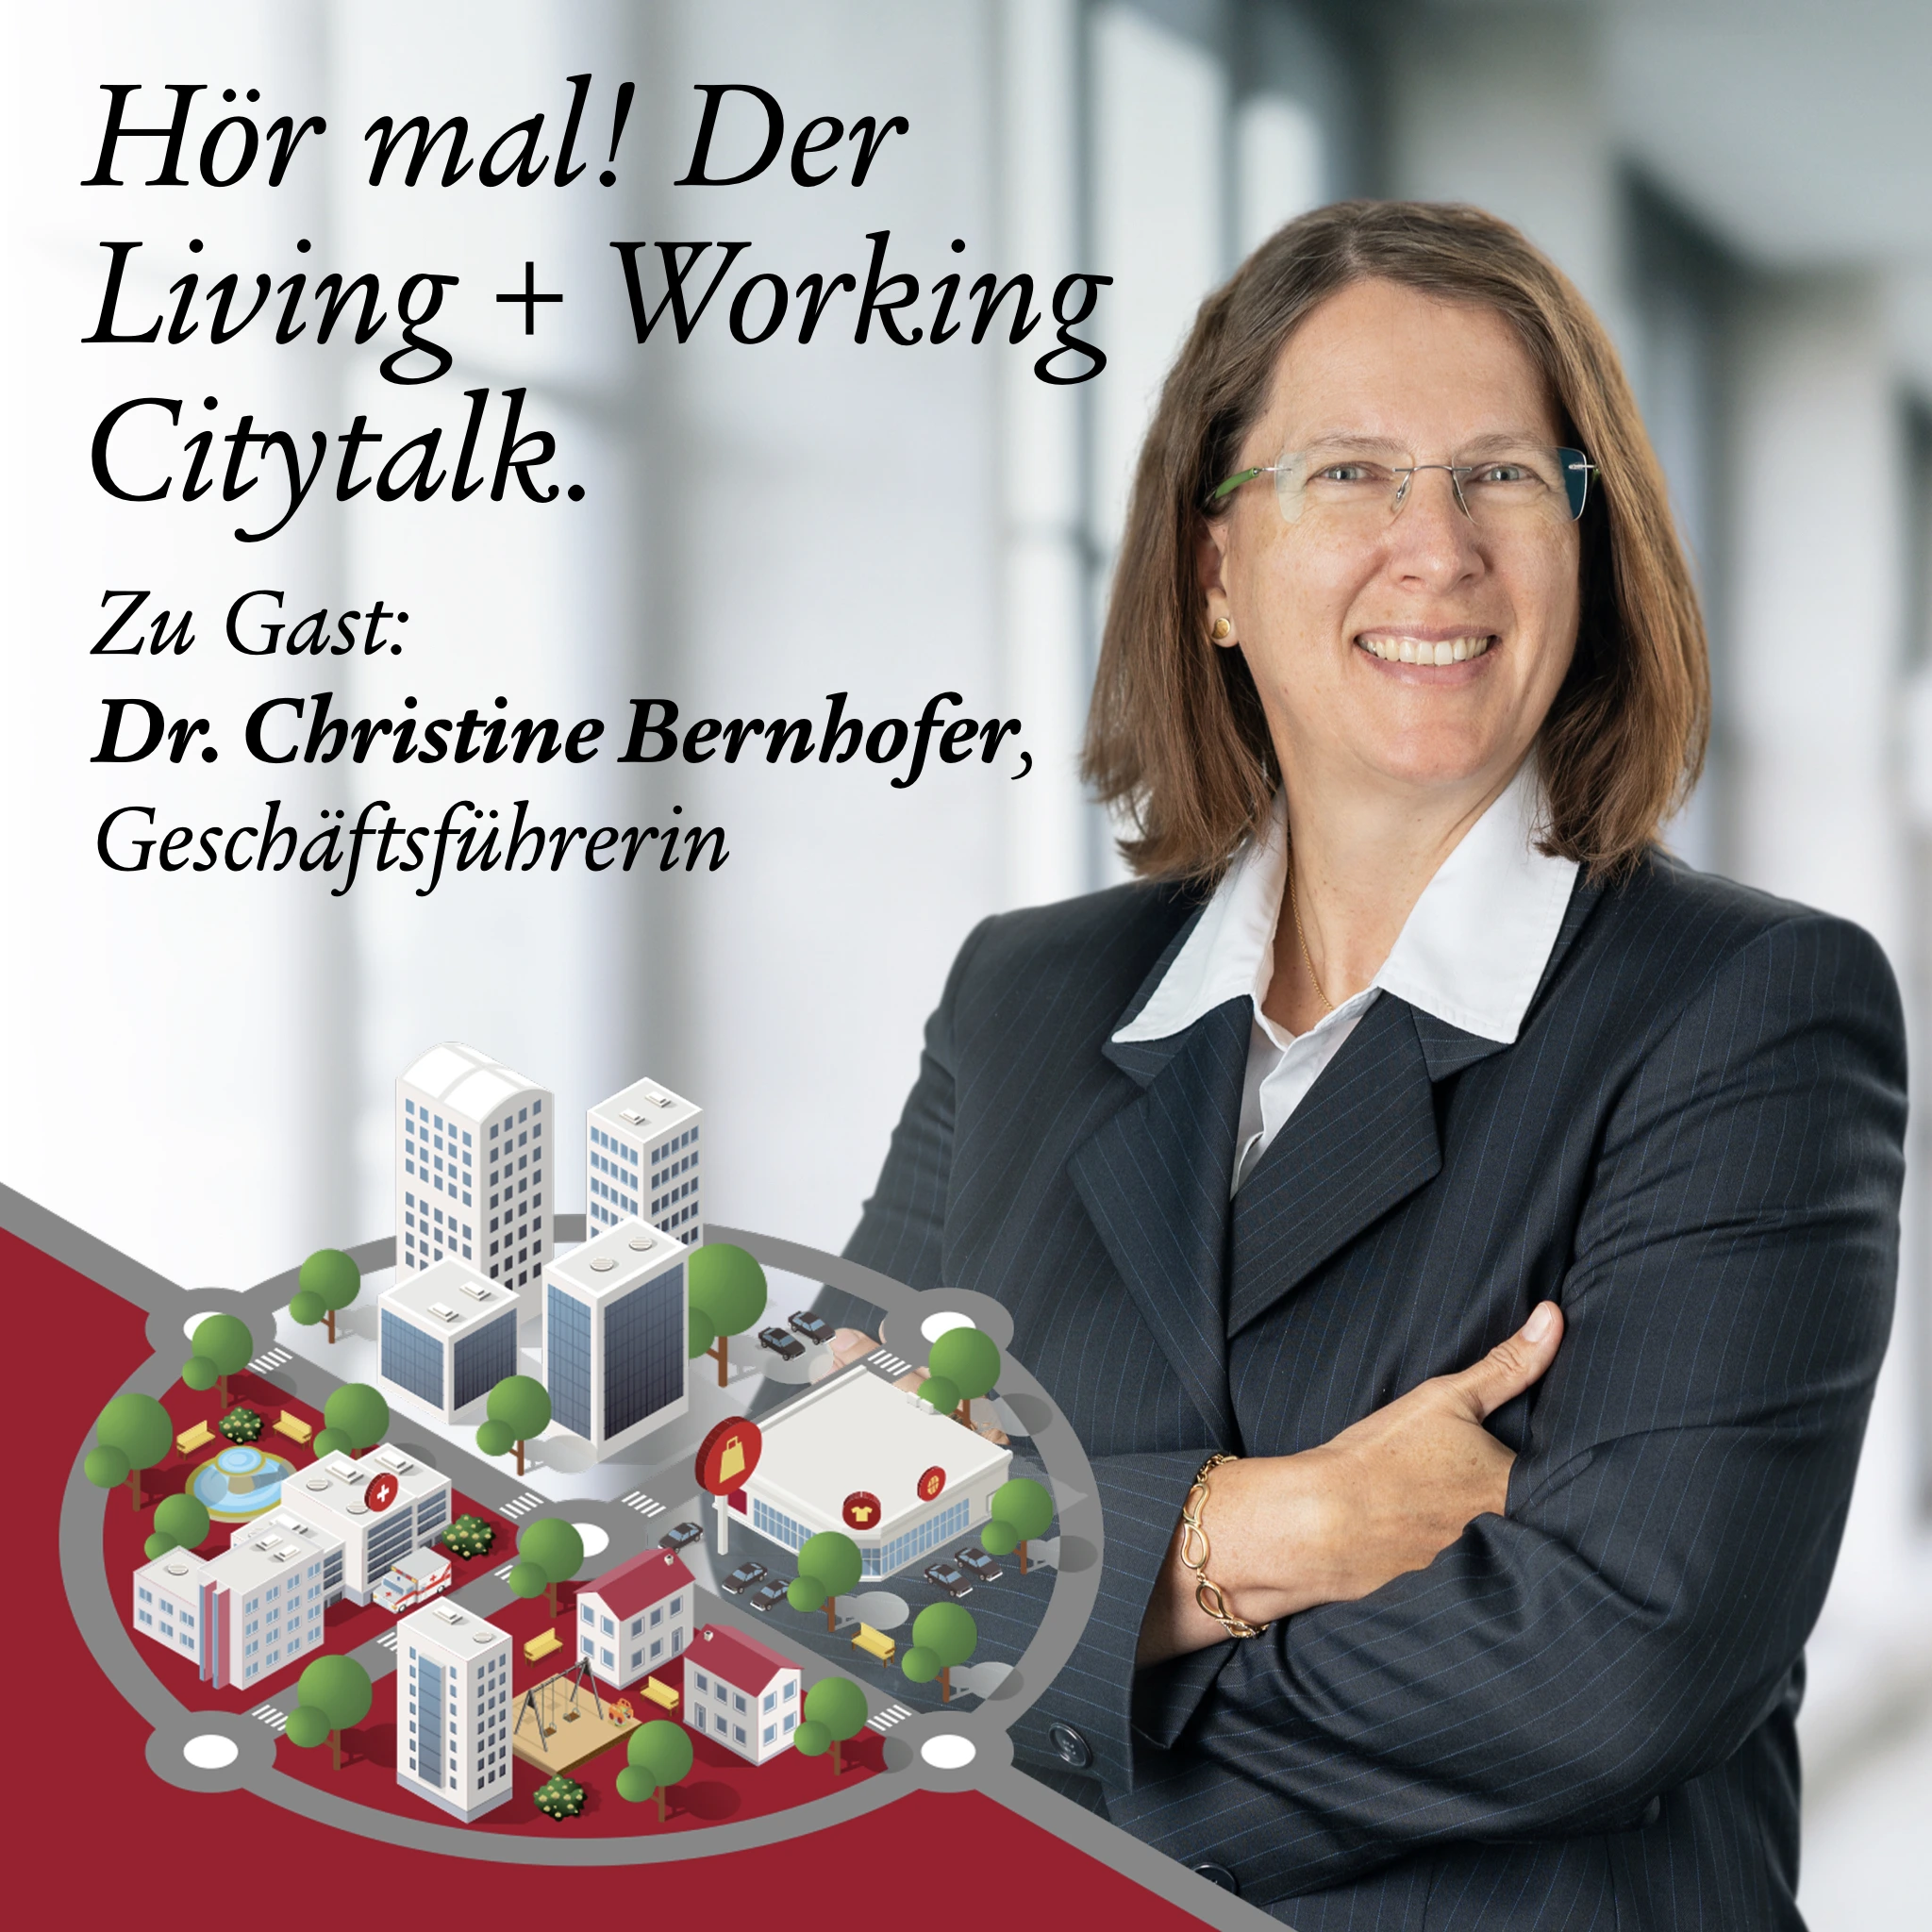 Citytalk mit Dr. Christine Bernhofer